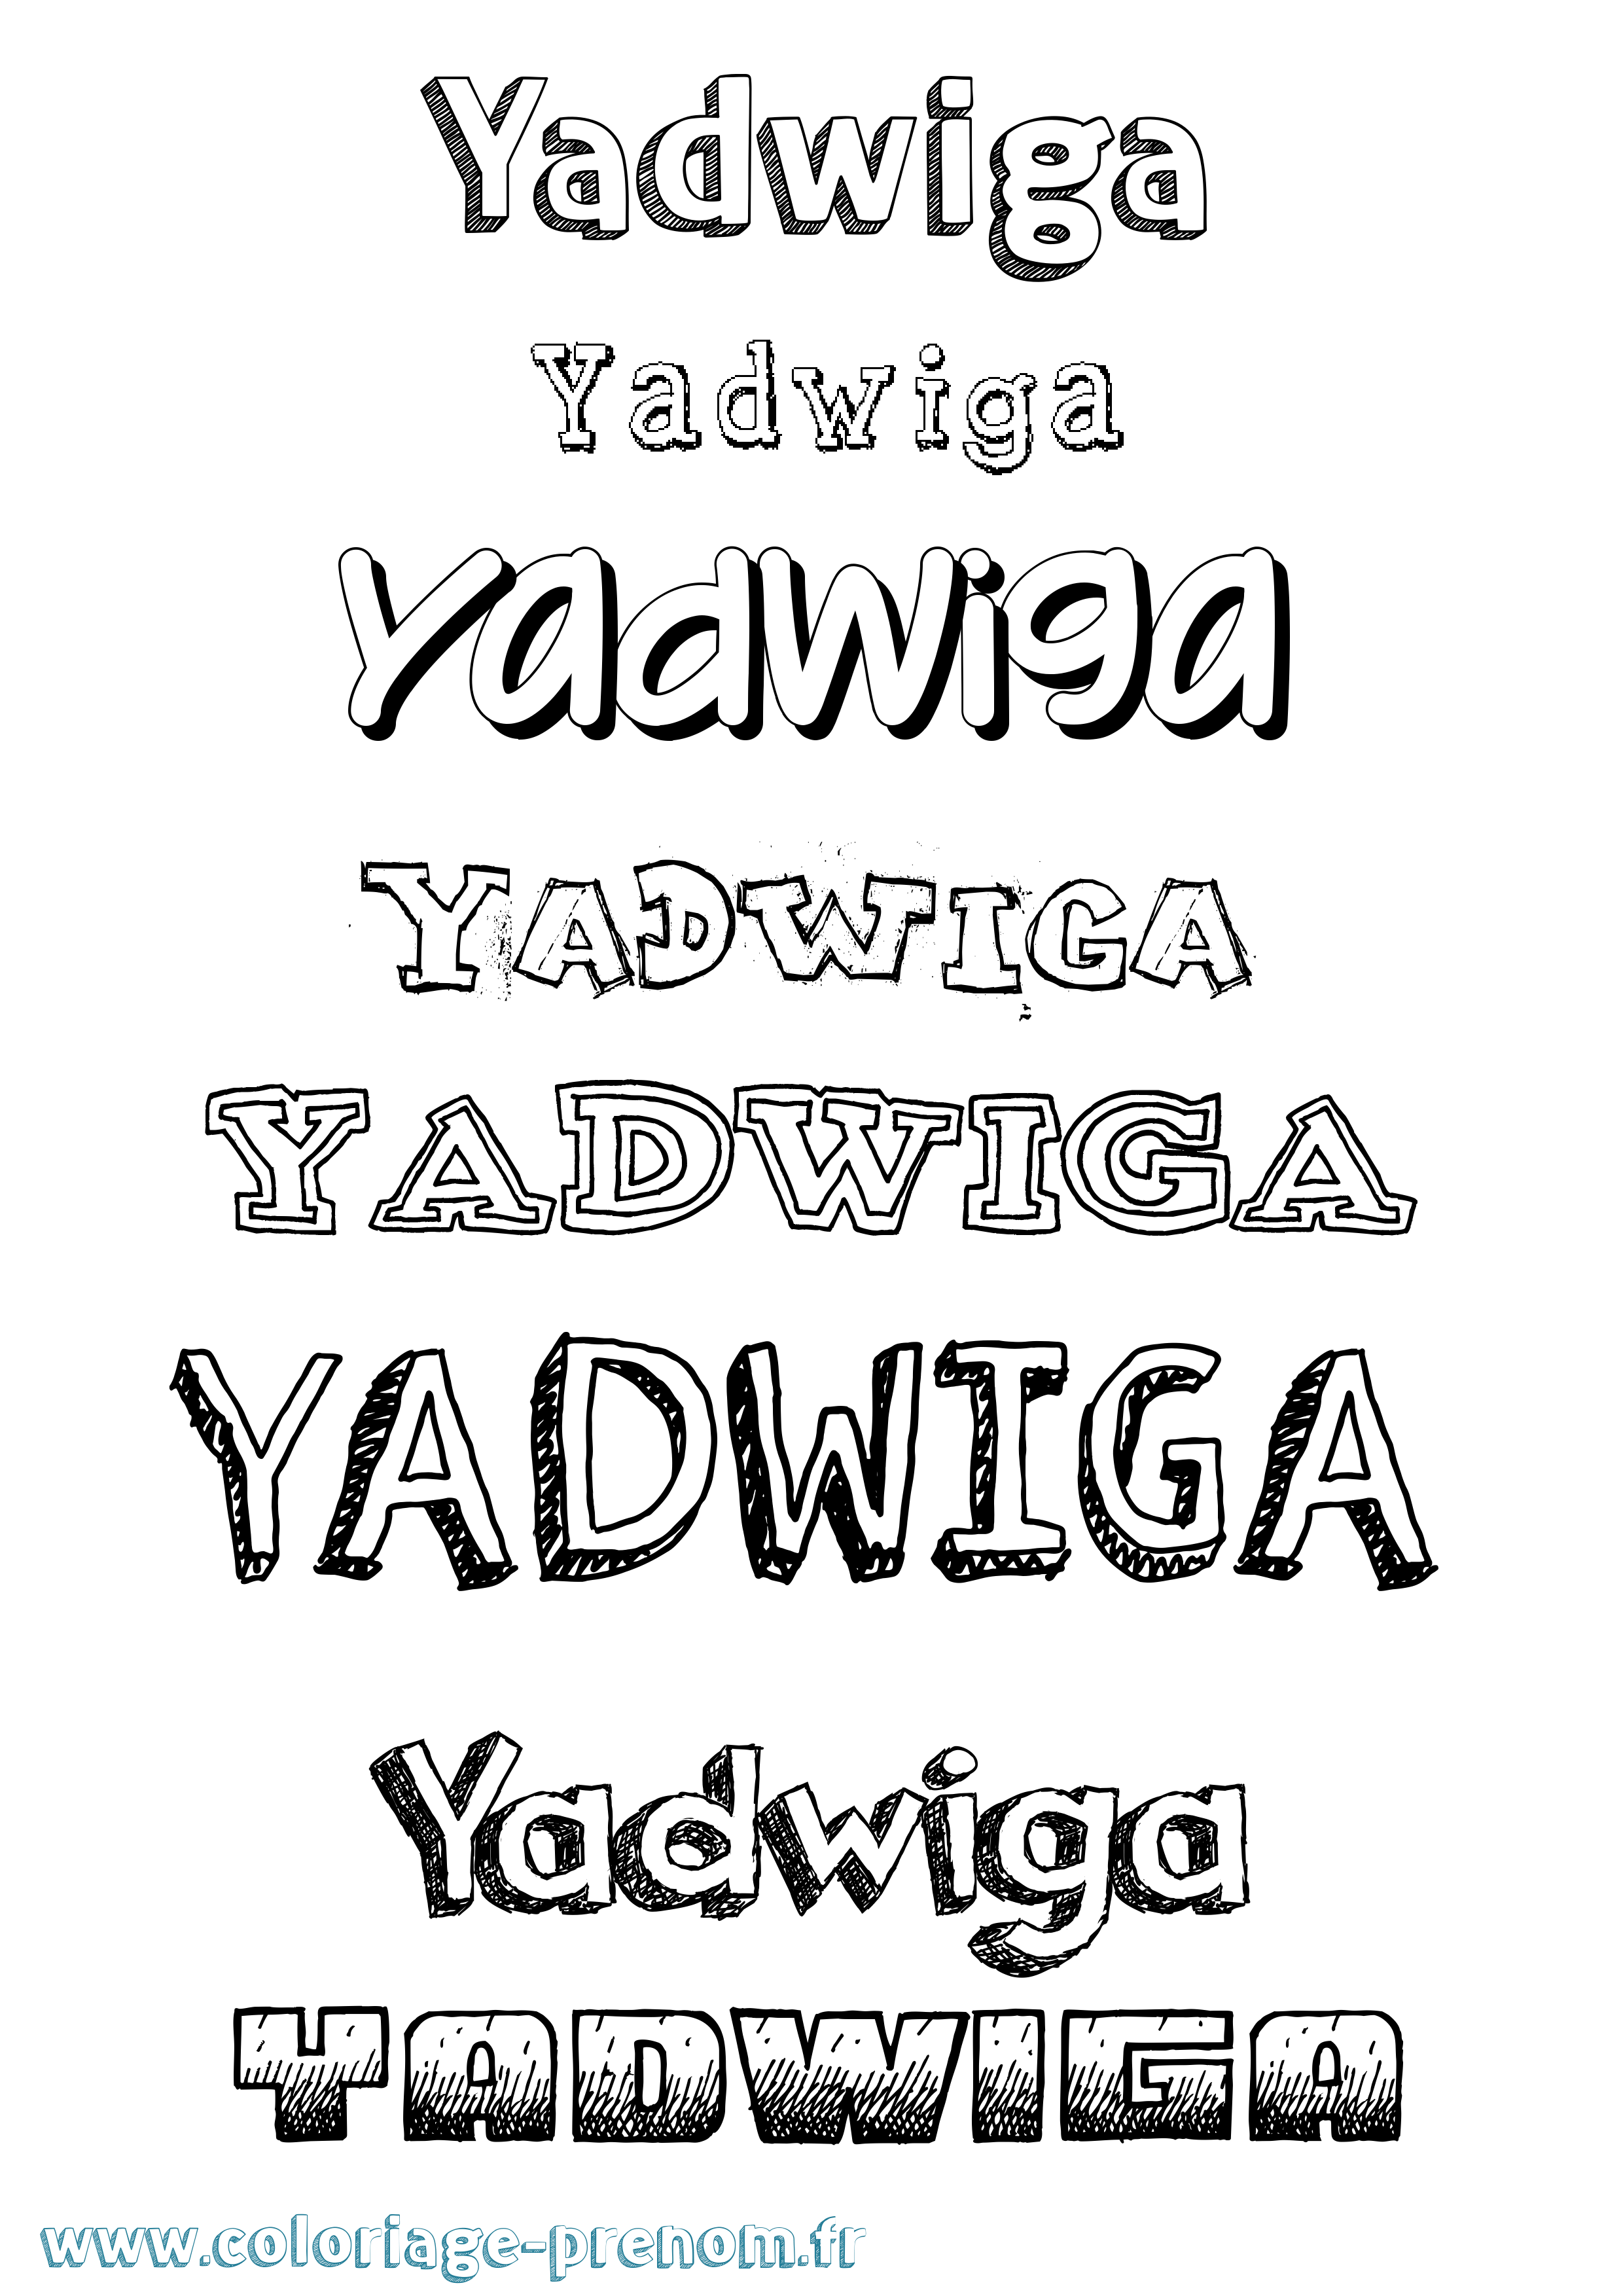 Coloriage prénom Yadwiga Dessiné